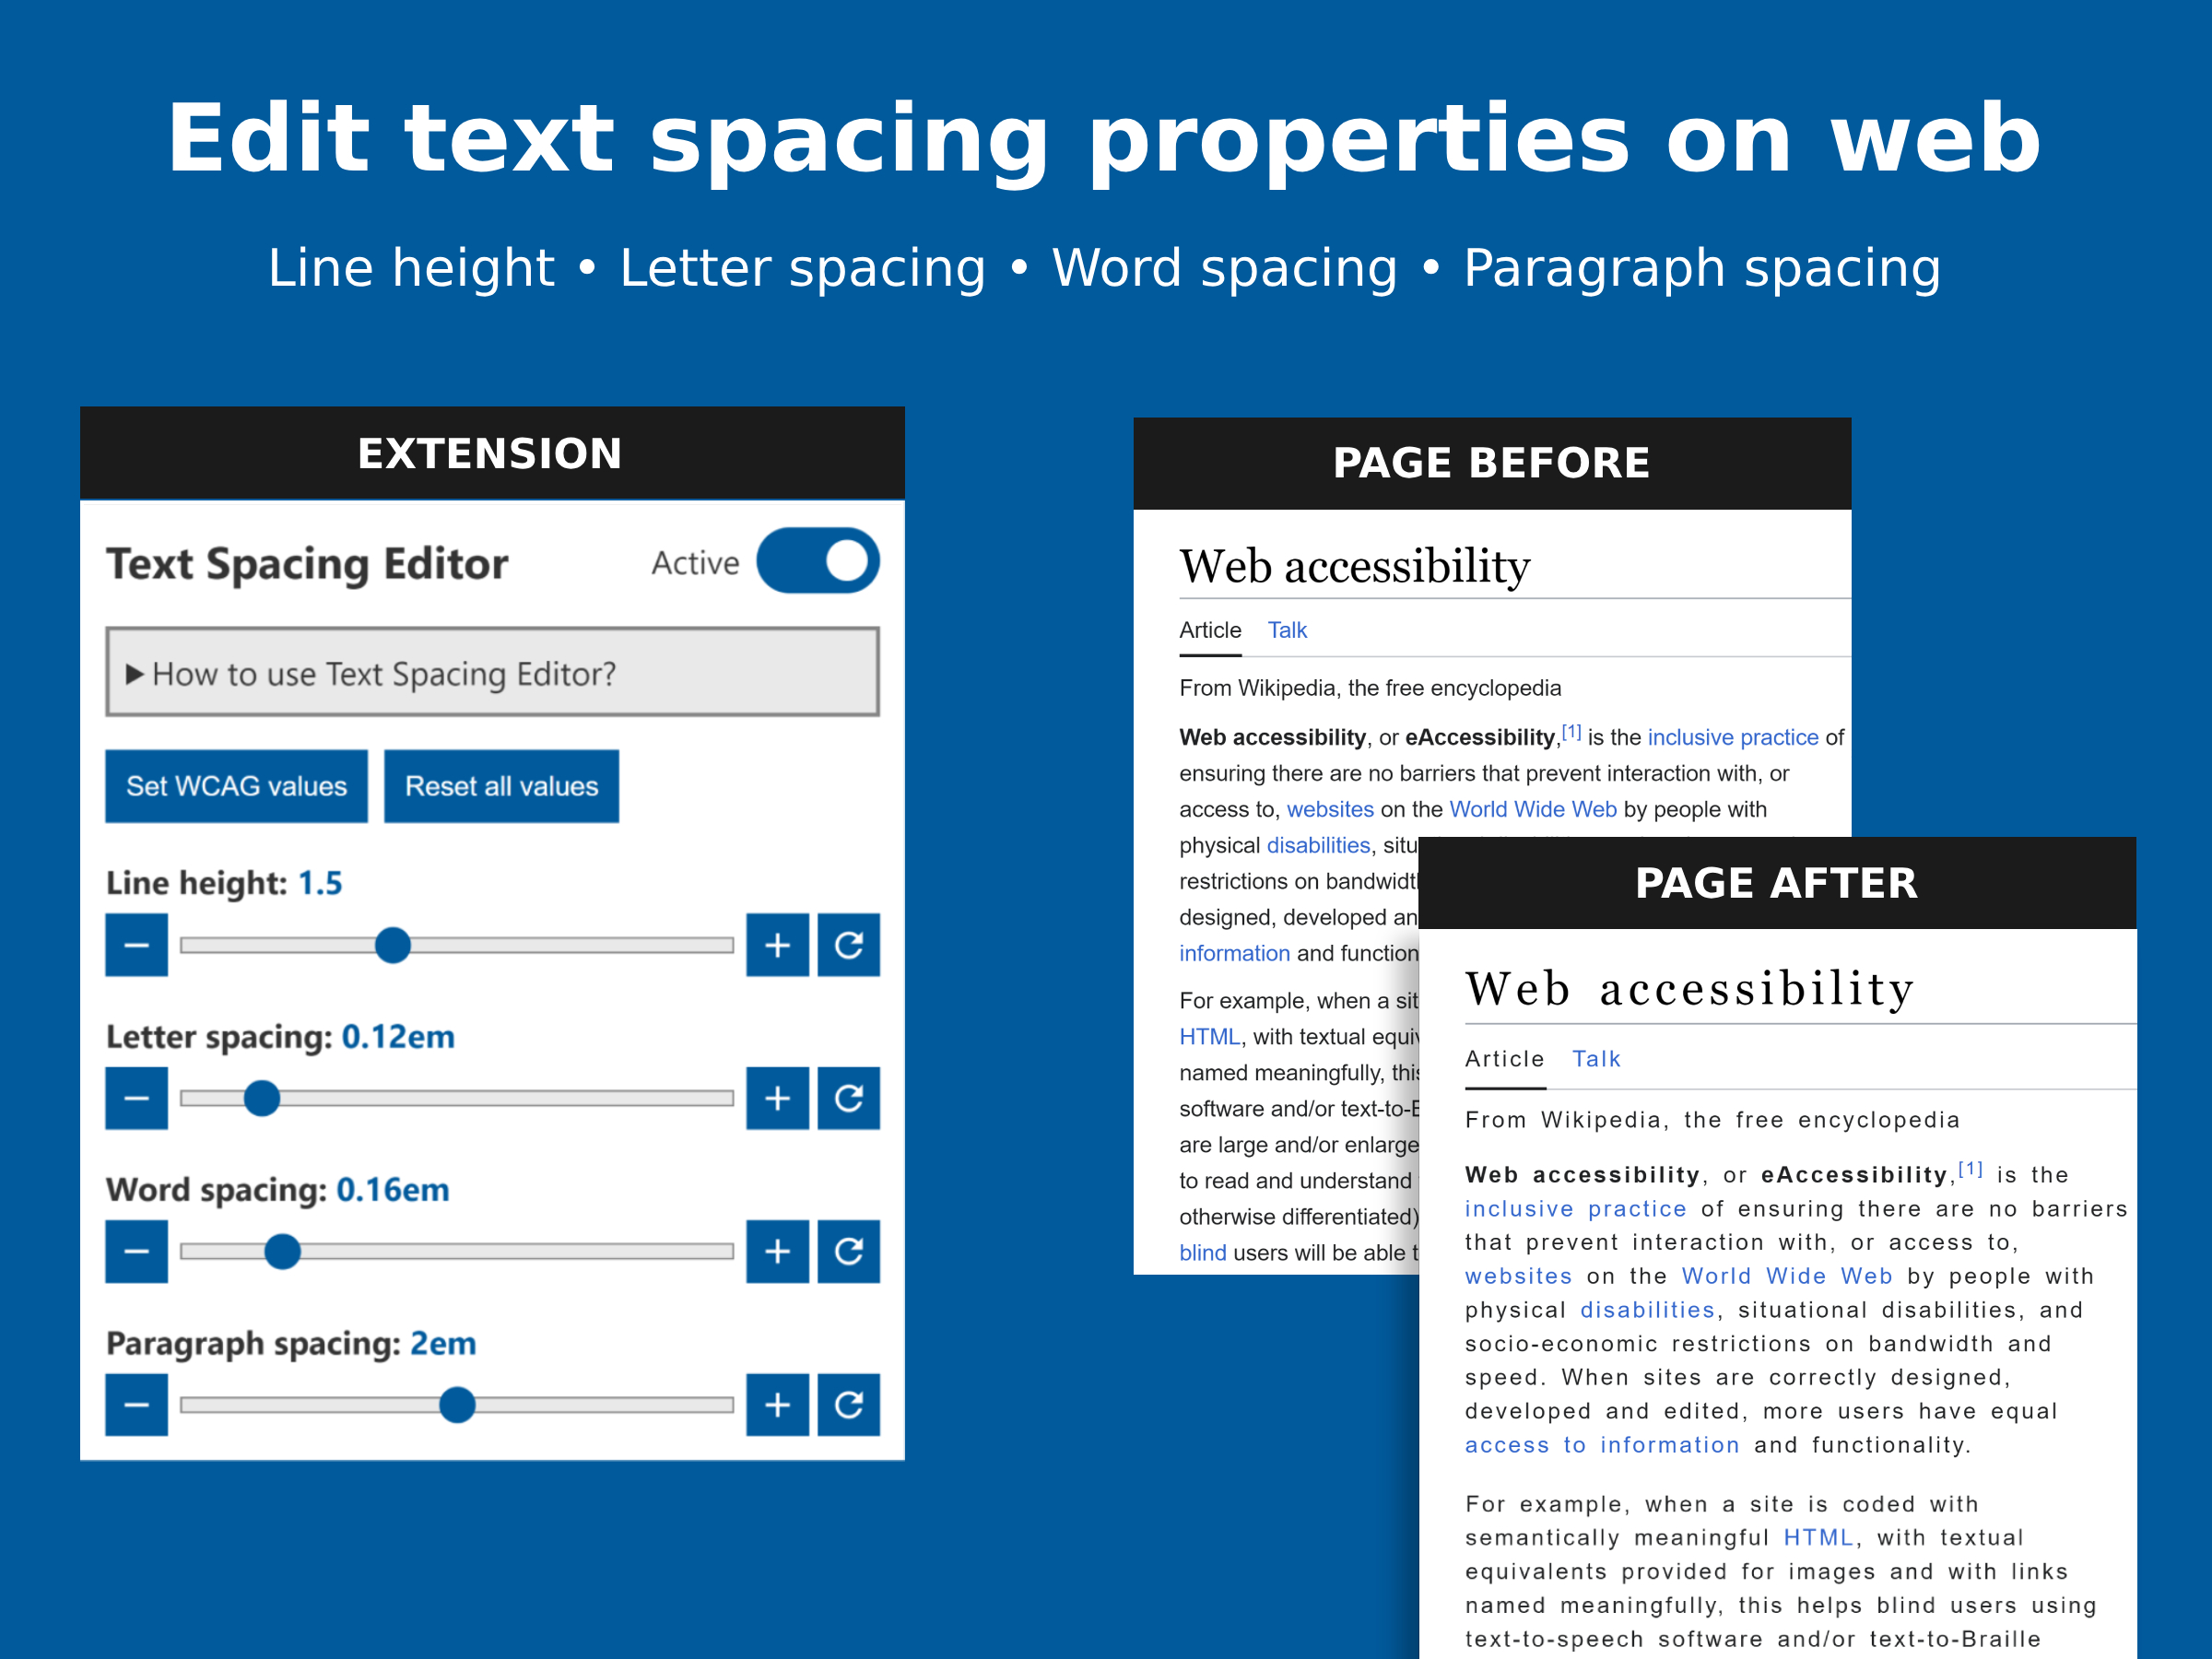 Text Spacing Editor